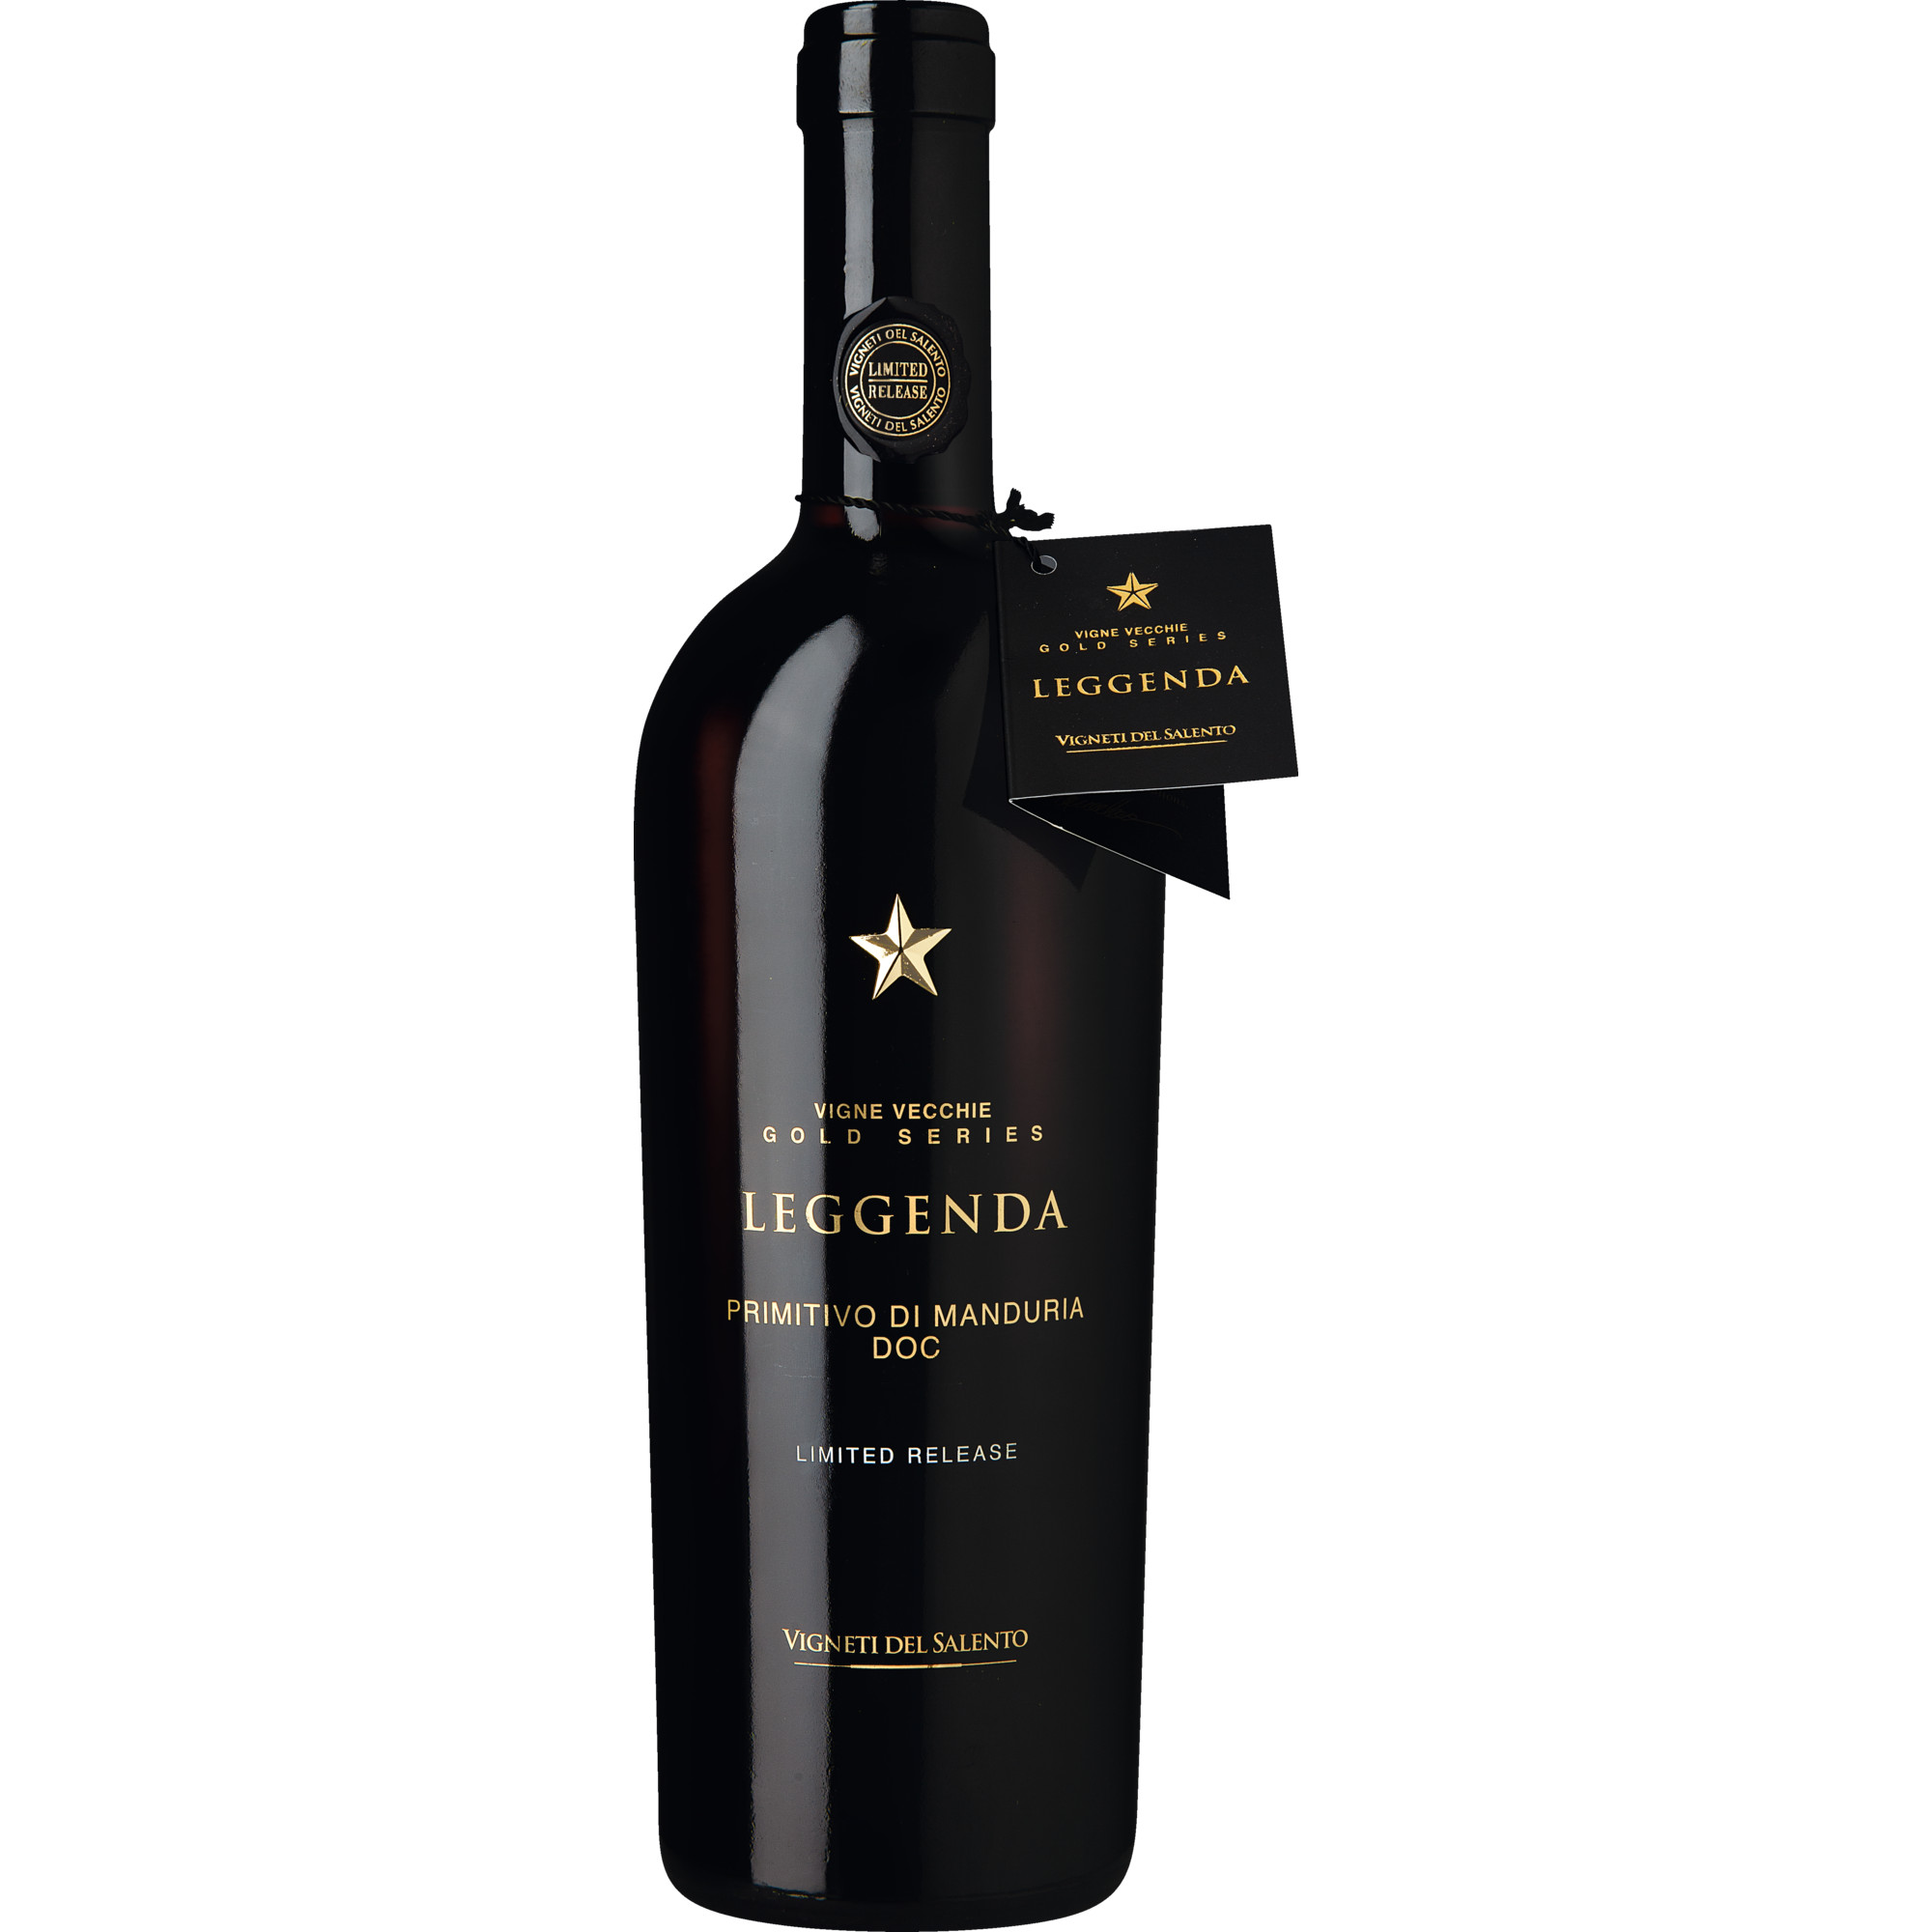 Acústic Braó 2019 0.75L 15% Vol. Rotwein Trocken aus Spanien